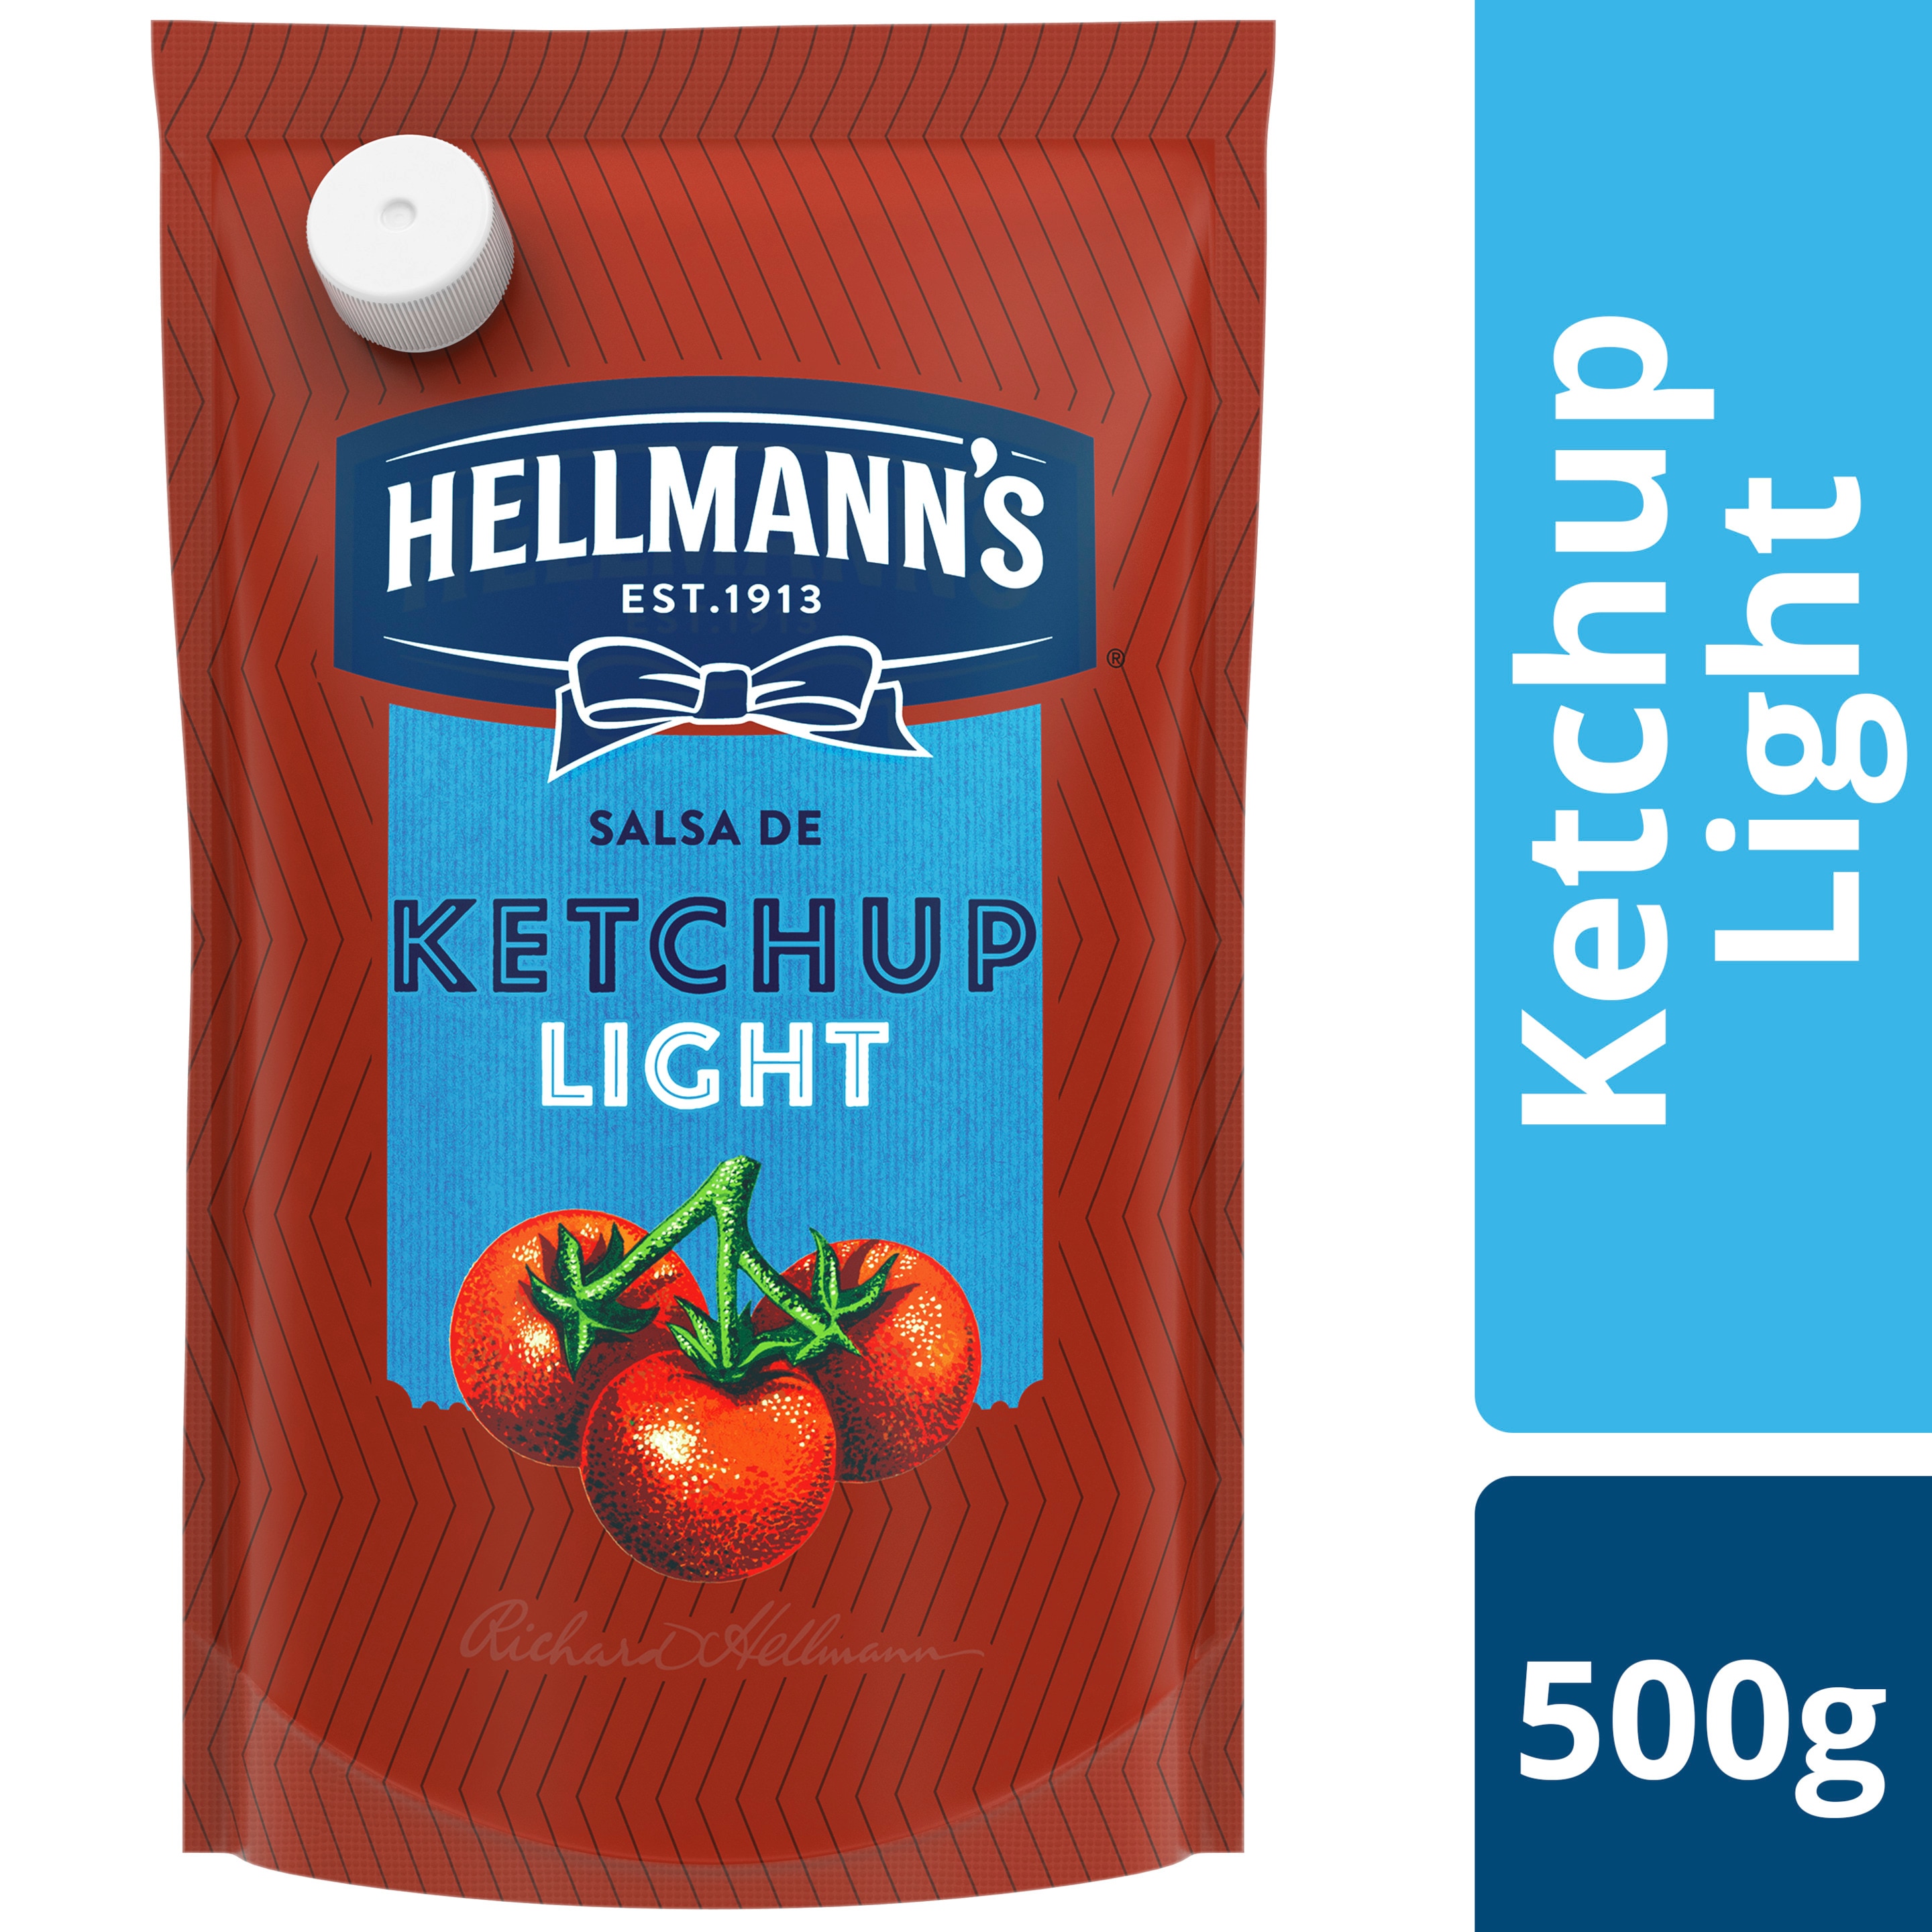 Imagen de envase de Ketchup Hellmann´s Light Doypack